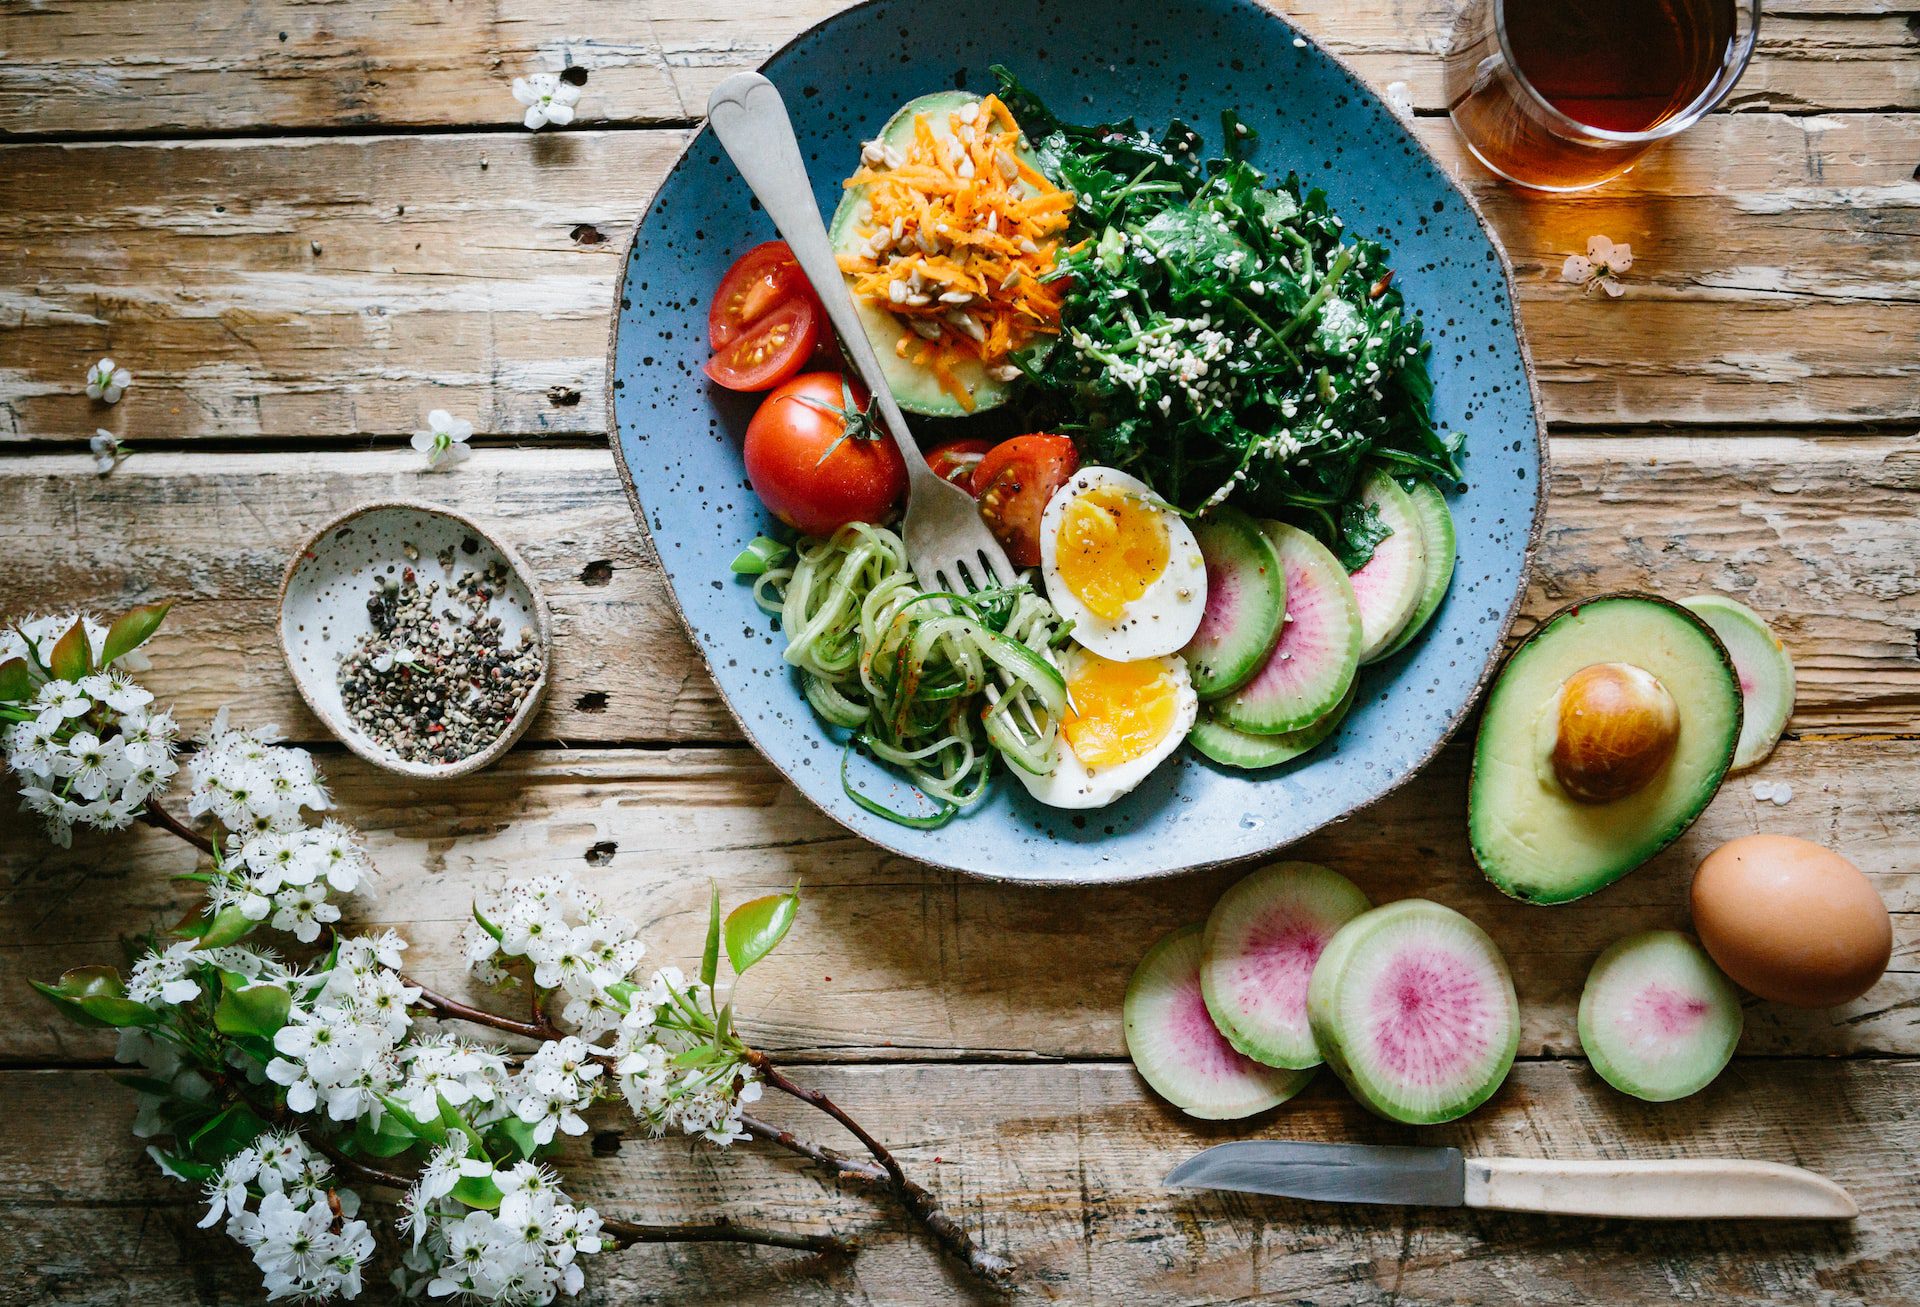 brooke lark jUPOXXRNdcA unsplash Nutrition Matters: The Importance of a Balanced Diet for Overall Wellbeing